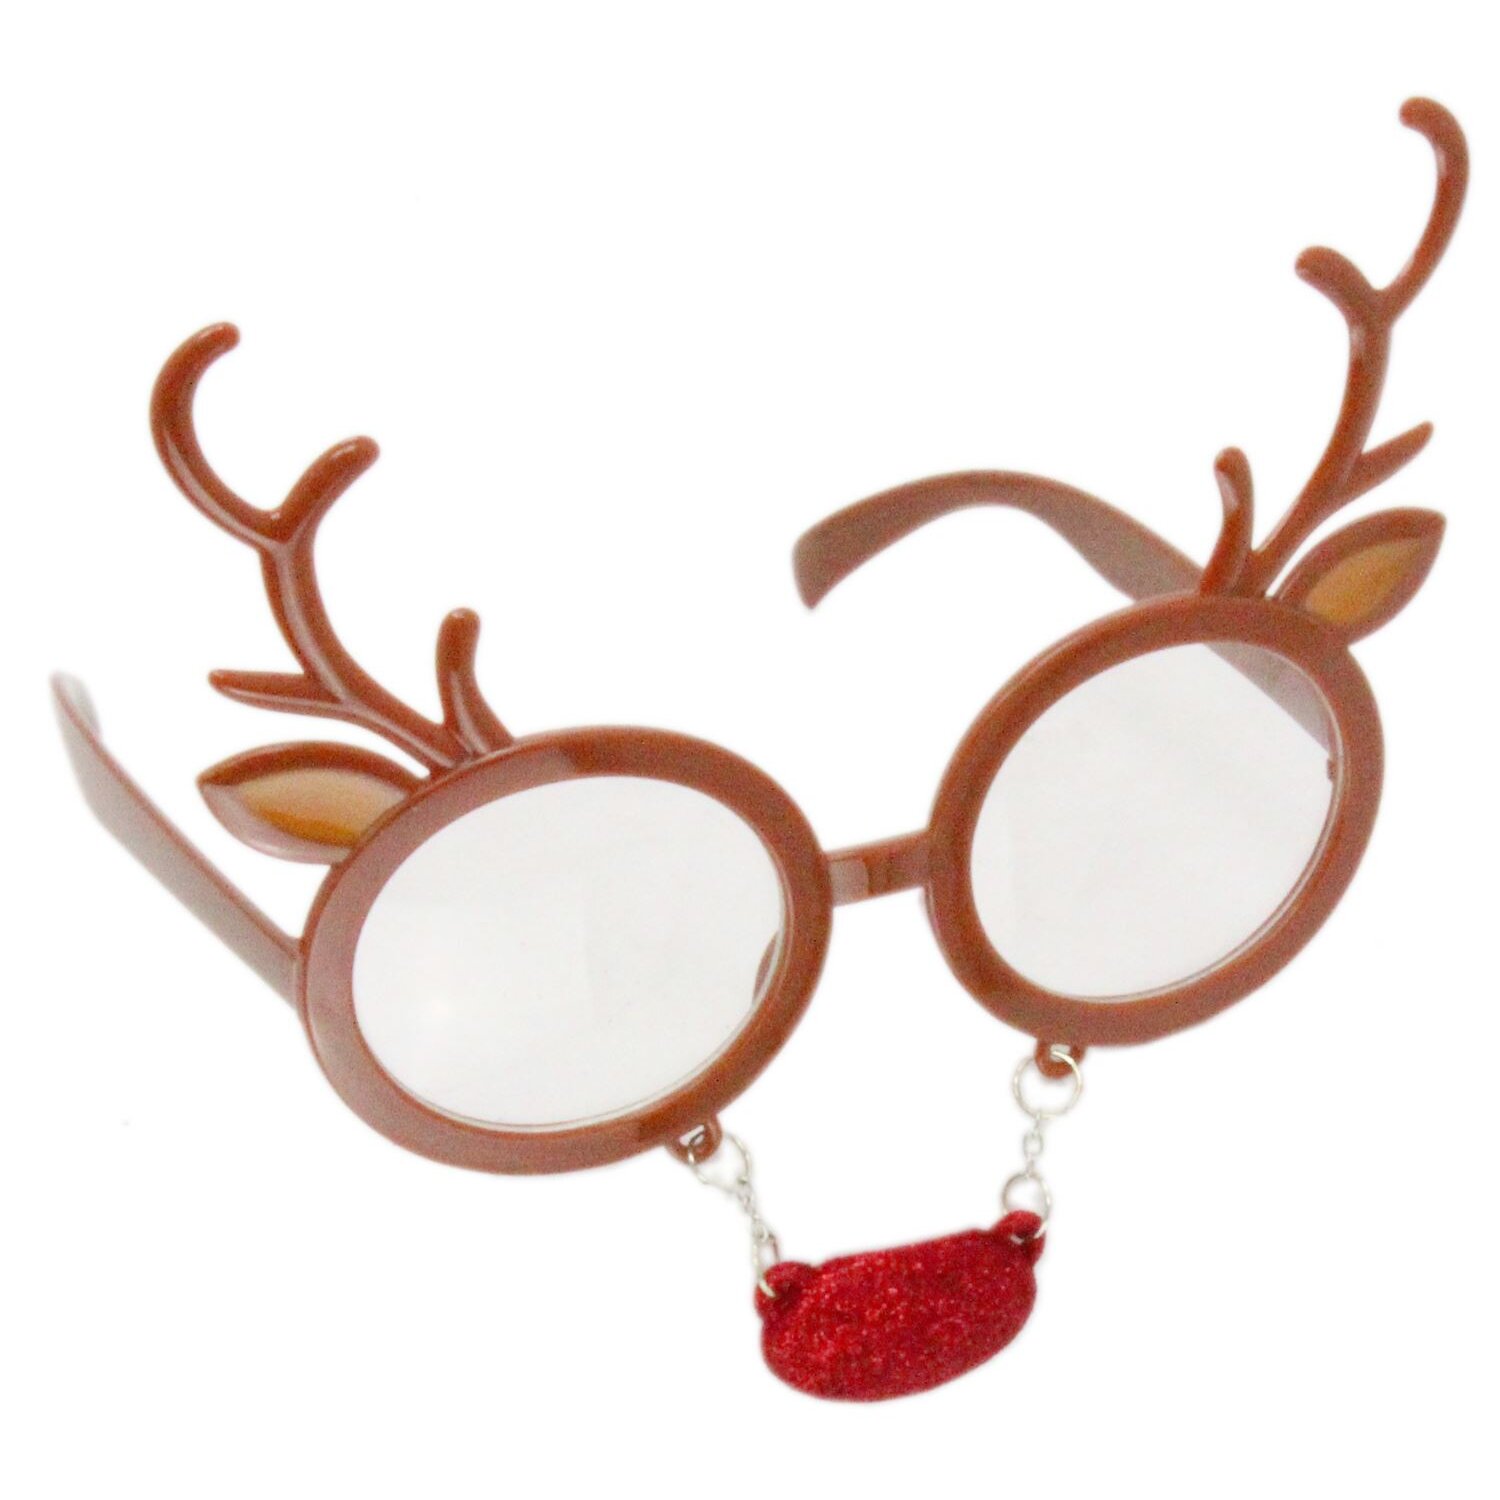 Novelty Christmas Party Fun Festive Fancy Dress Glasses - Reindeer